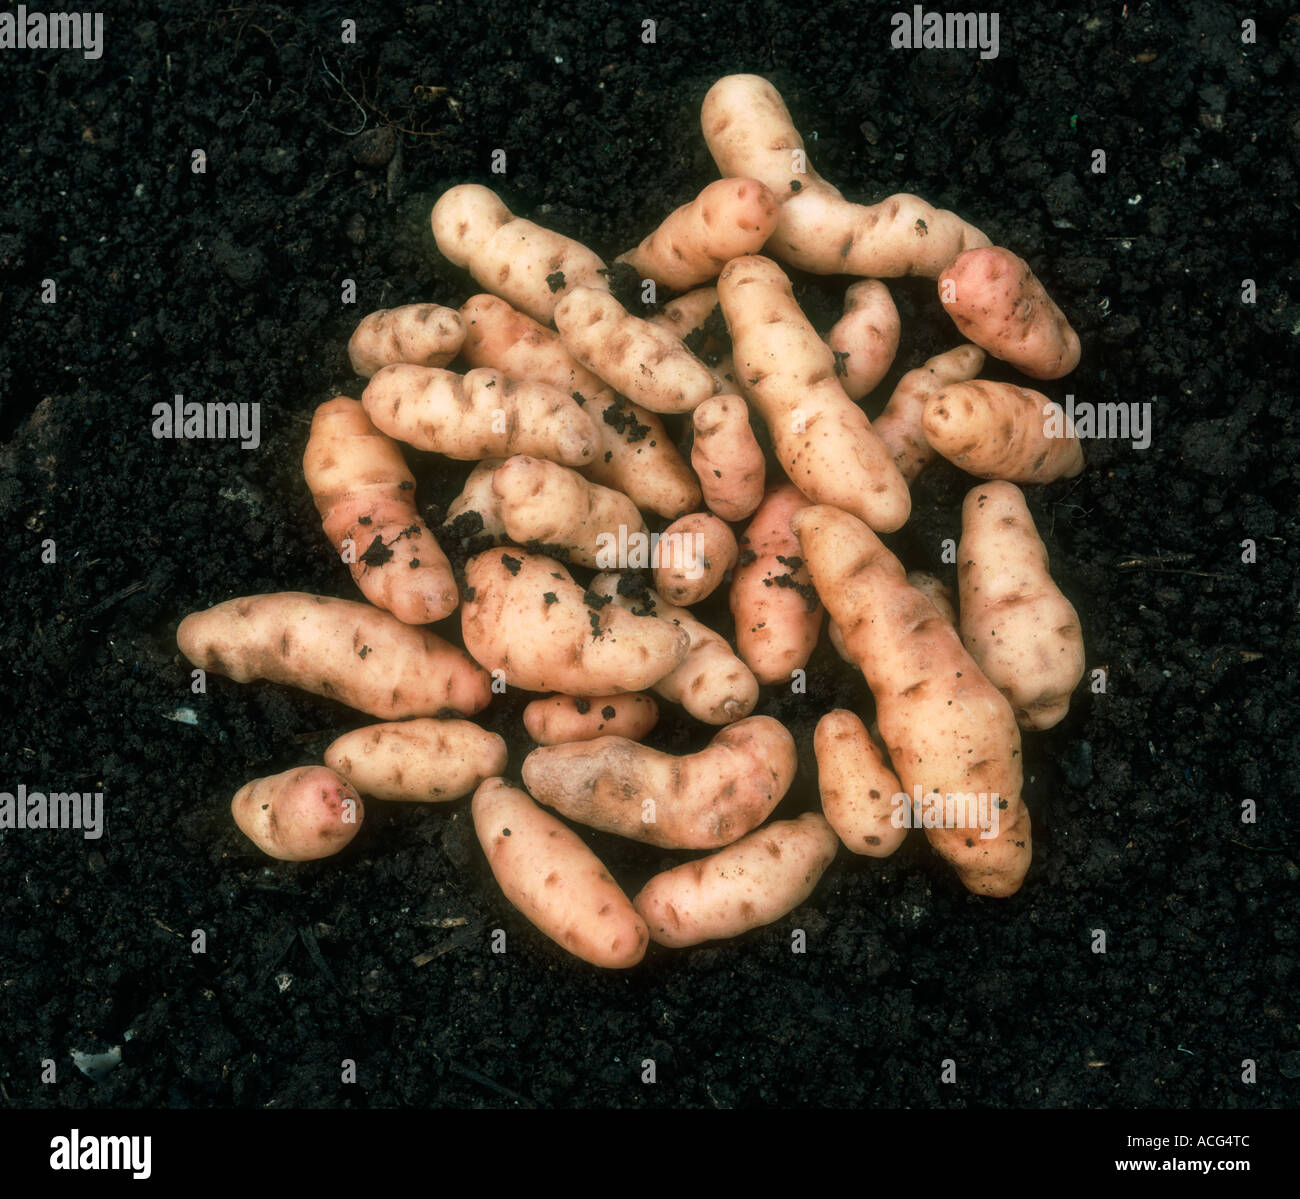 Harvested potato tubers on soil variety Anya Stock Photo